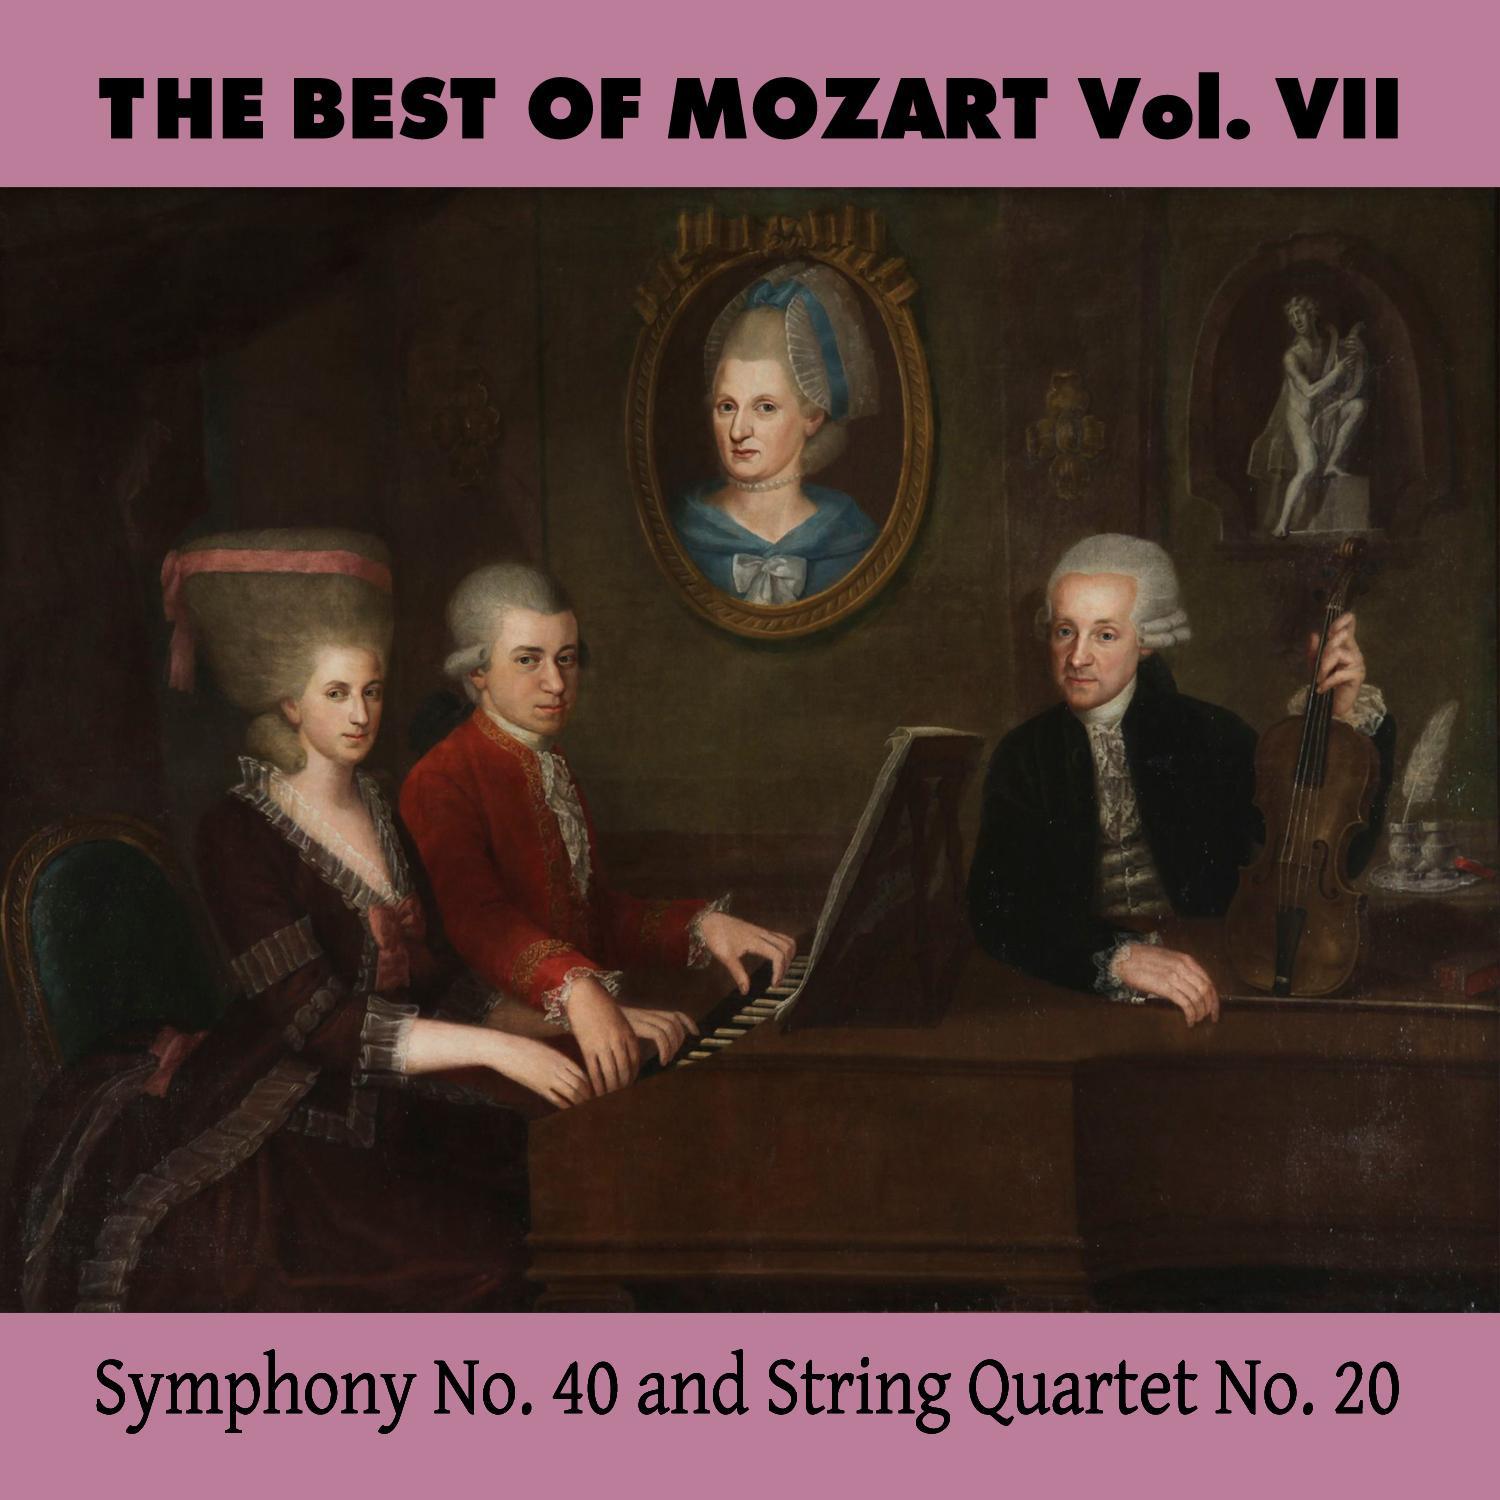 Slovenská Filharmónia - String Quartet No. 20 in D Major, K. 499: II. Menuetto and trio - Allegretto